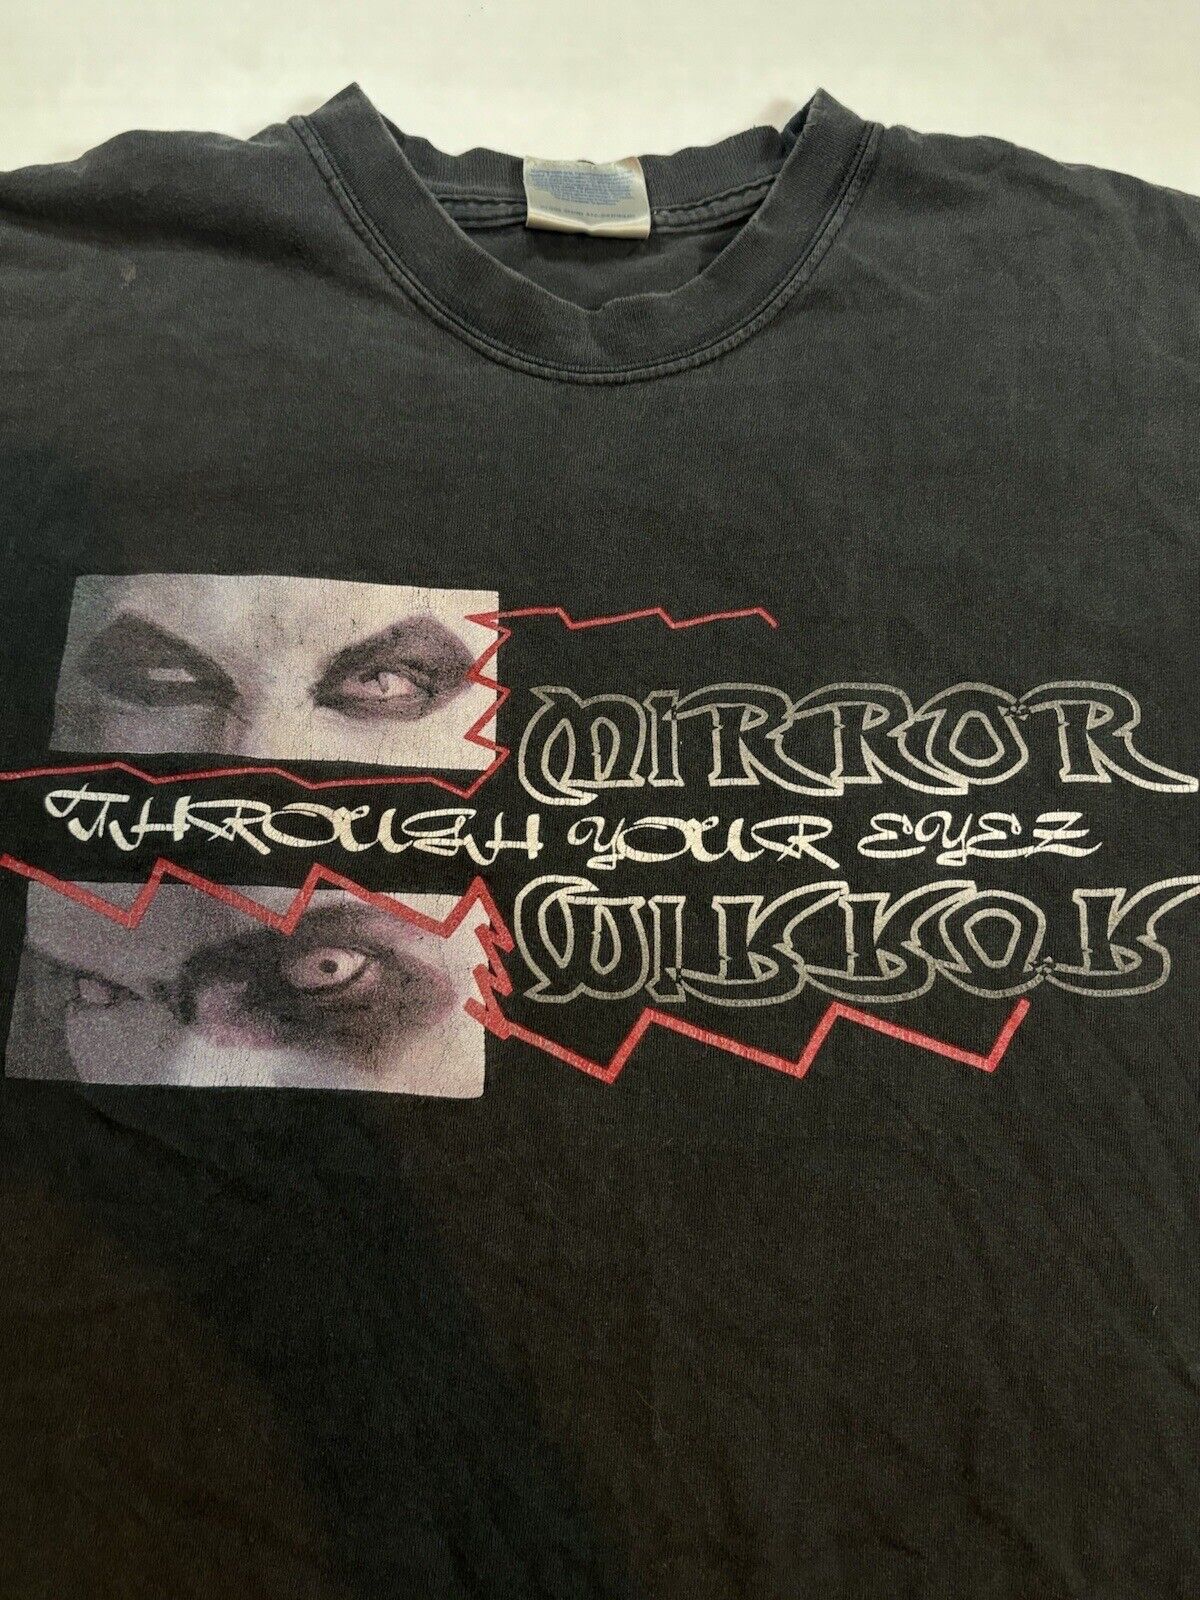 Vintage Rare Twizted Mirror Mirror Psychopathic Records Insane Clown Posse ICP